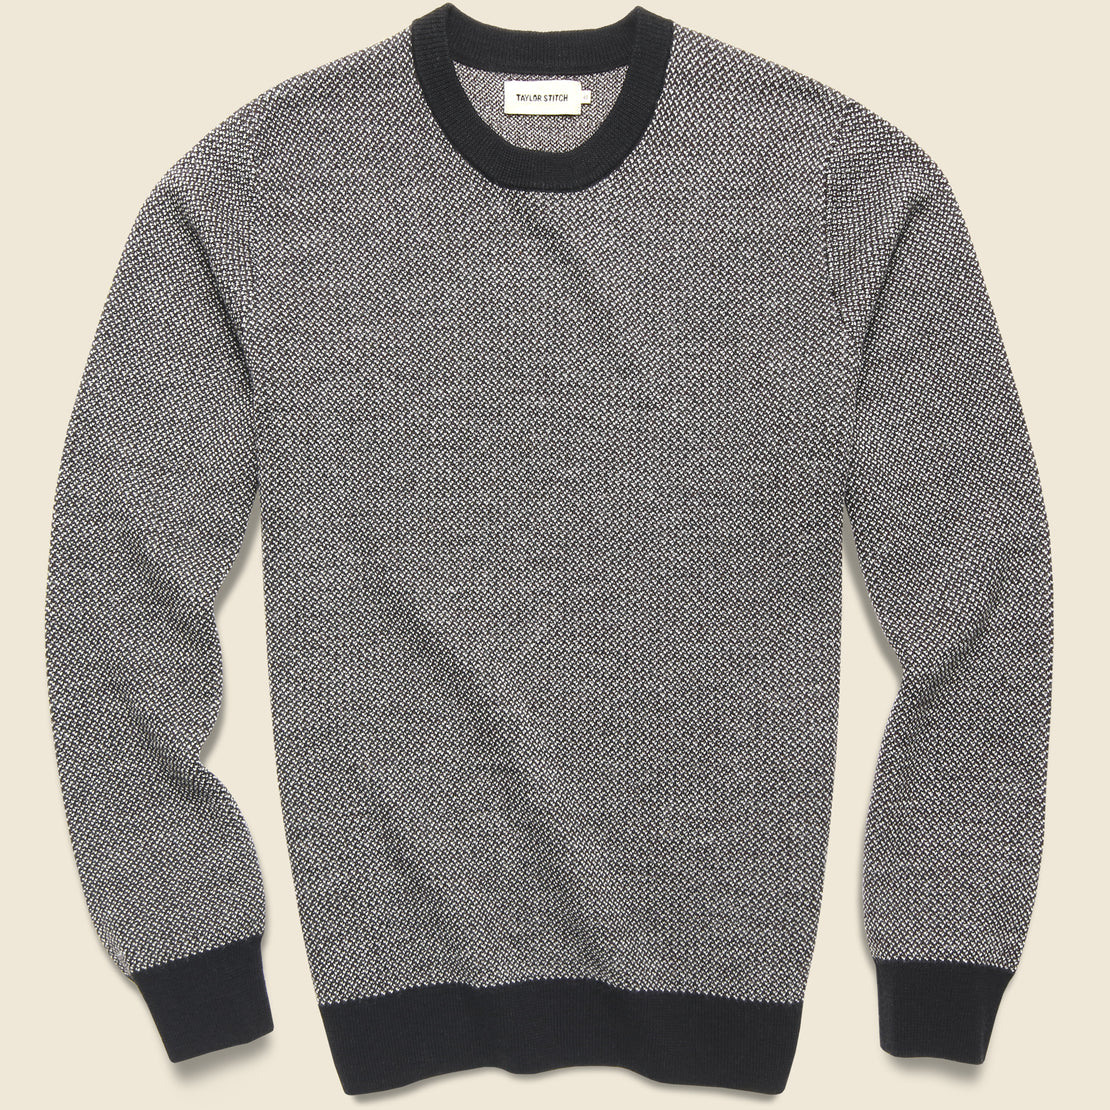 Taylor Stitch Everett Sweater - Black Birdseye